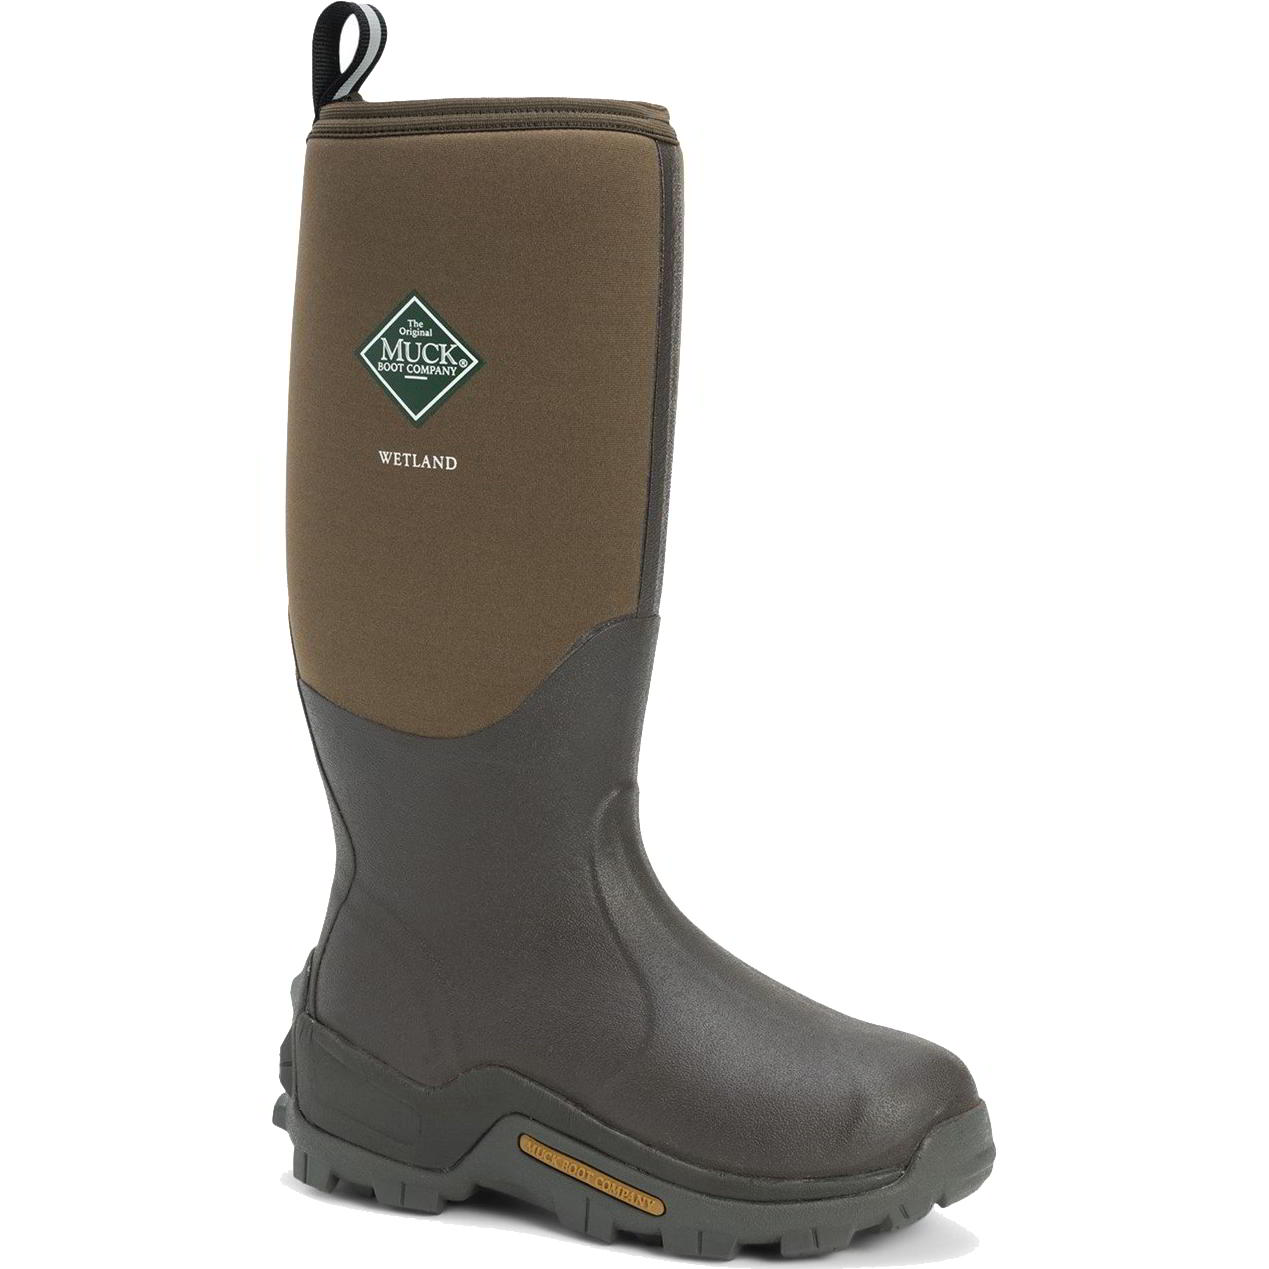 Muck Boots Mens Wellies Wetland Tall Neoprene Wellington - UK 10 Brown 2951